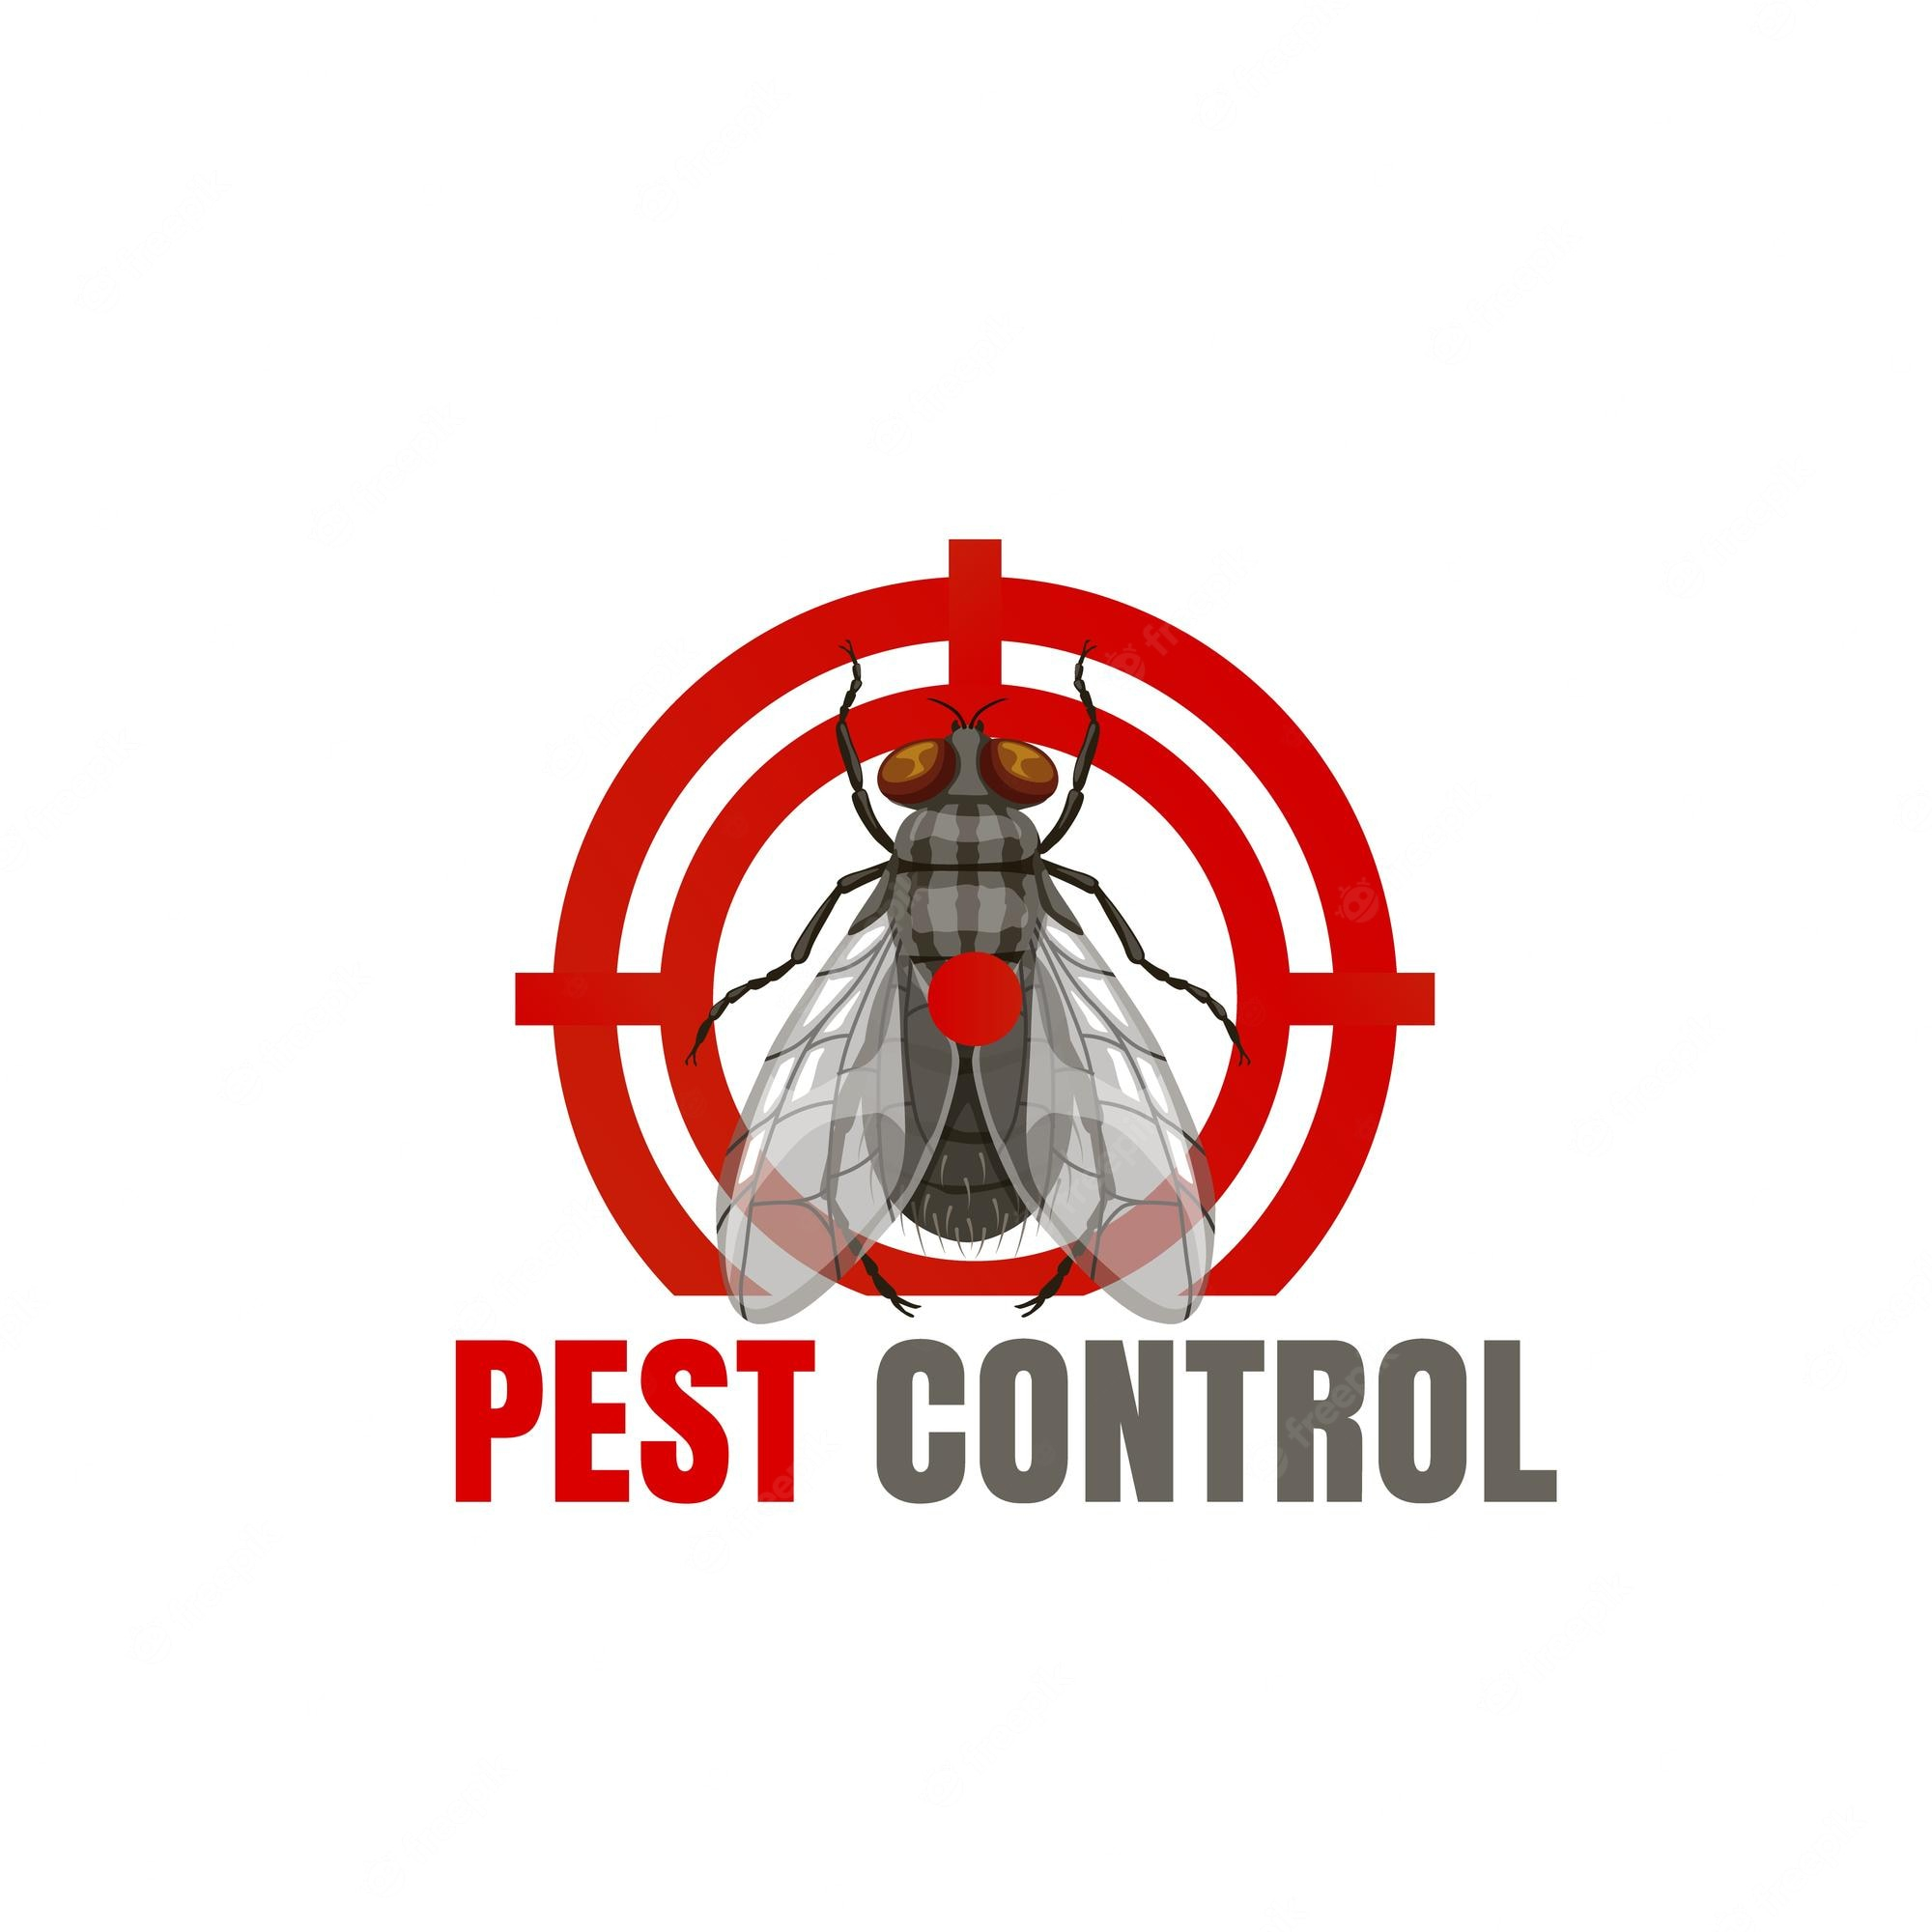 Pest Stop